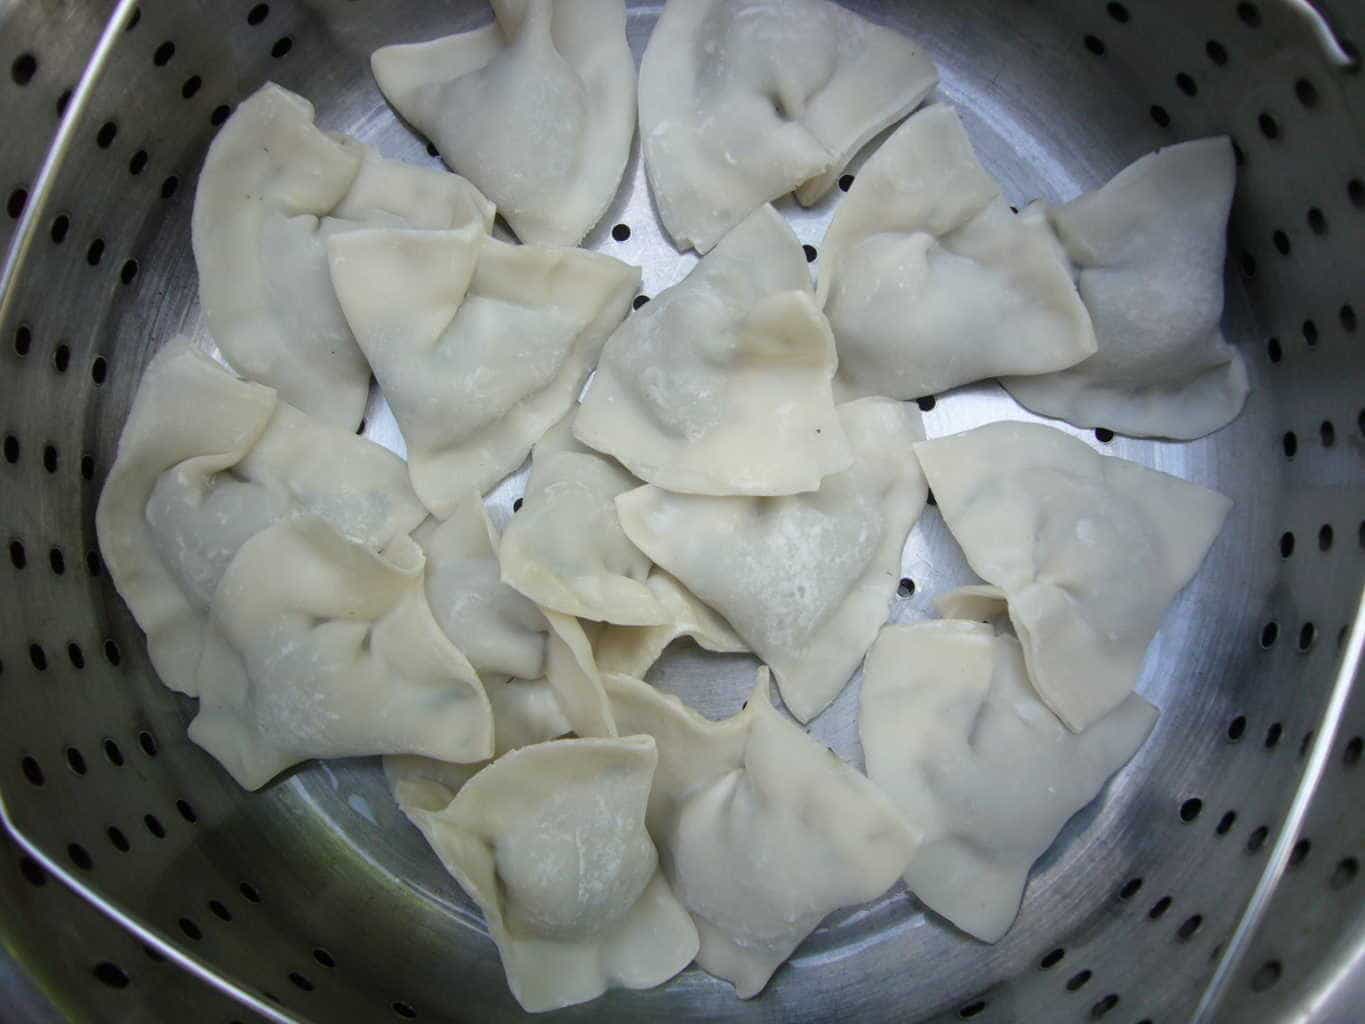 Manti dumplings with mushroom filling placed in a steamer basket.